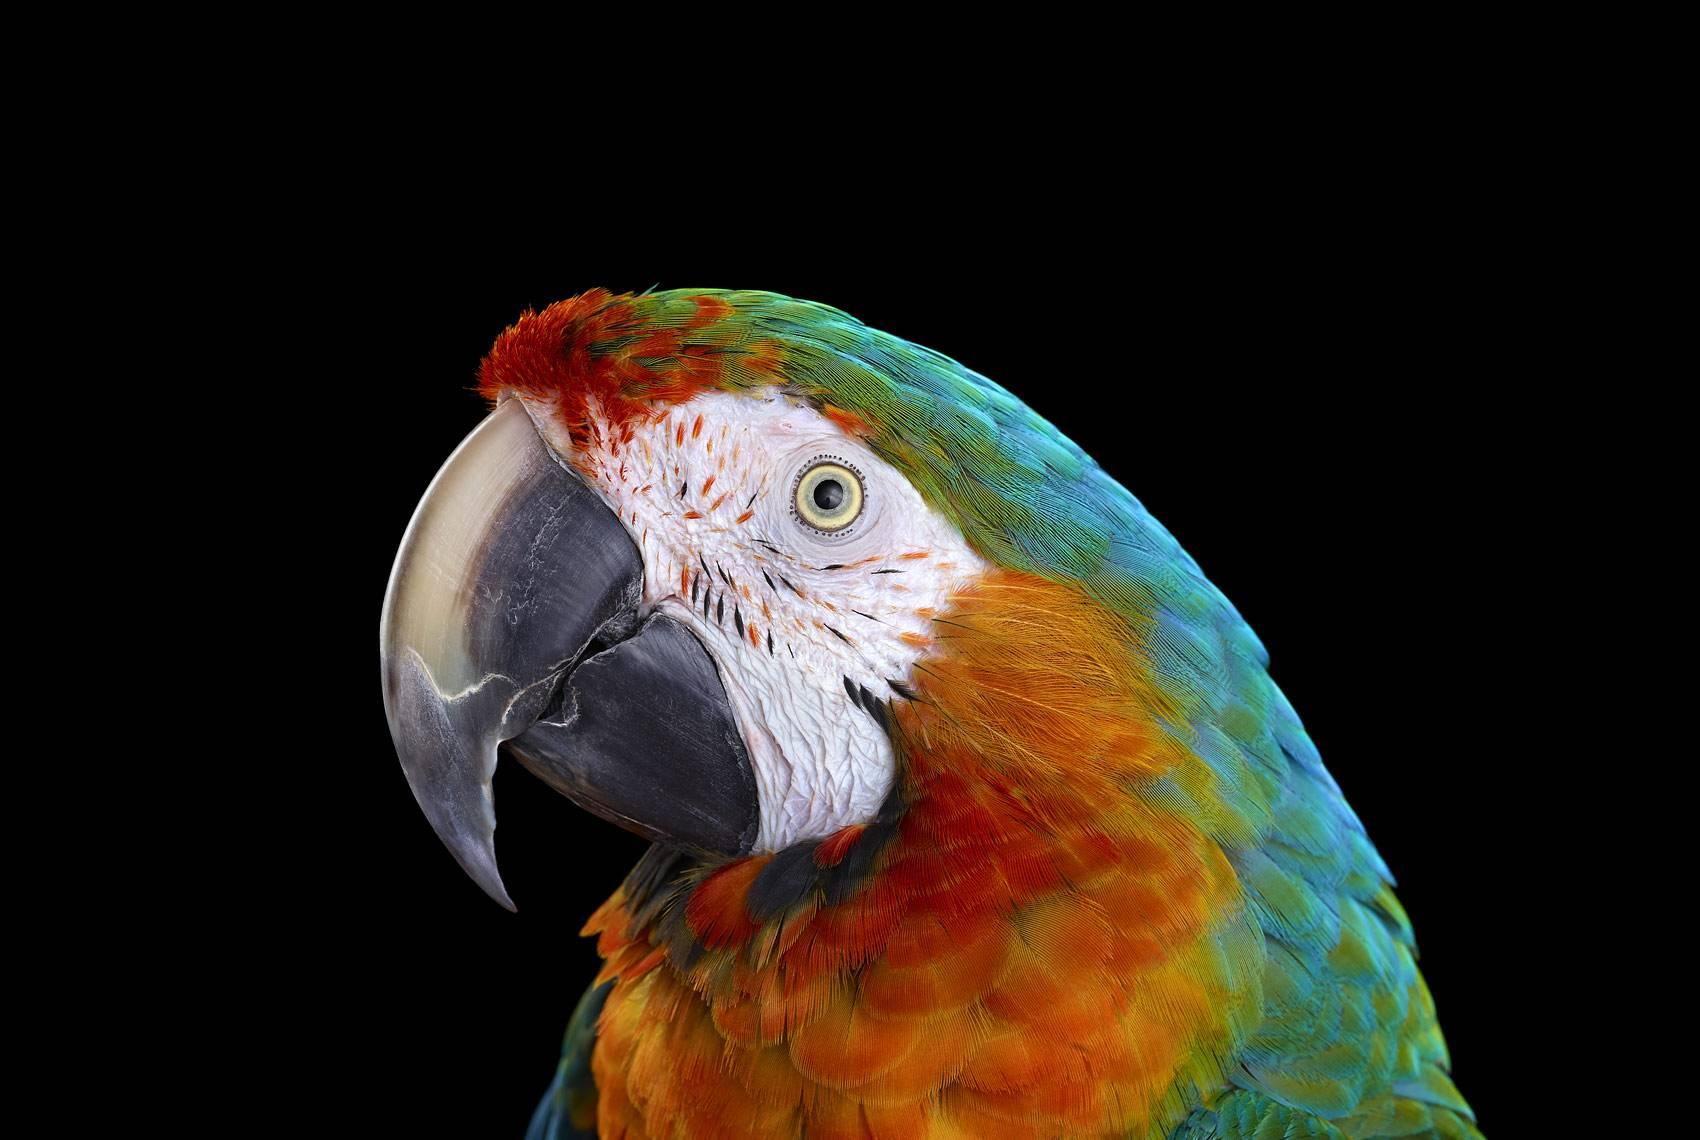 Brad Wilson Color Photograph - Catalina Macaw #1, Albuquerque, NM, 2016